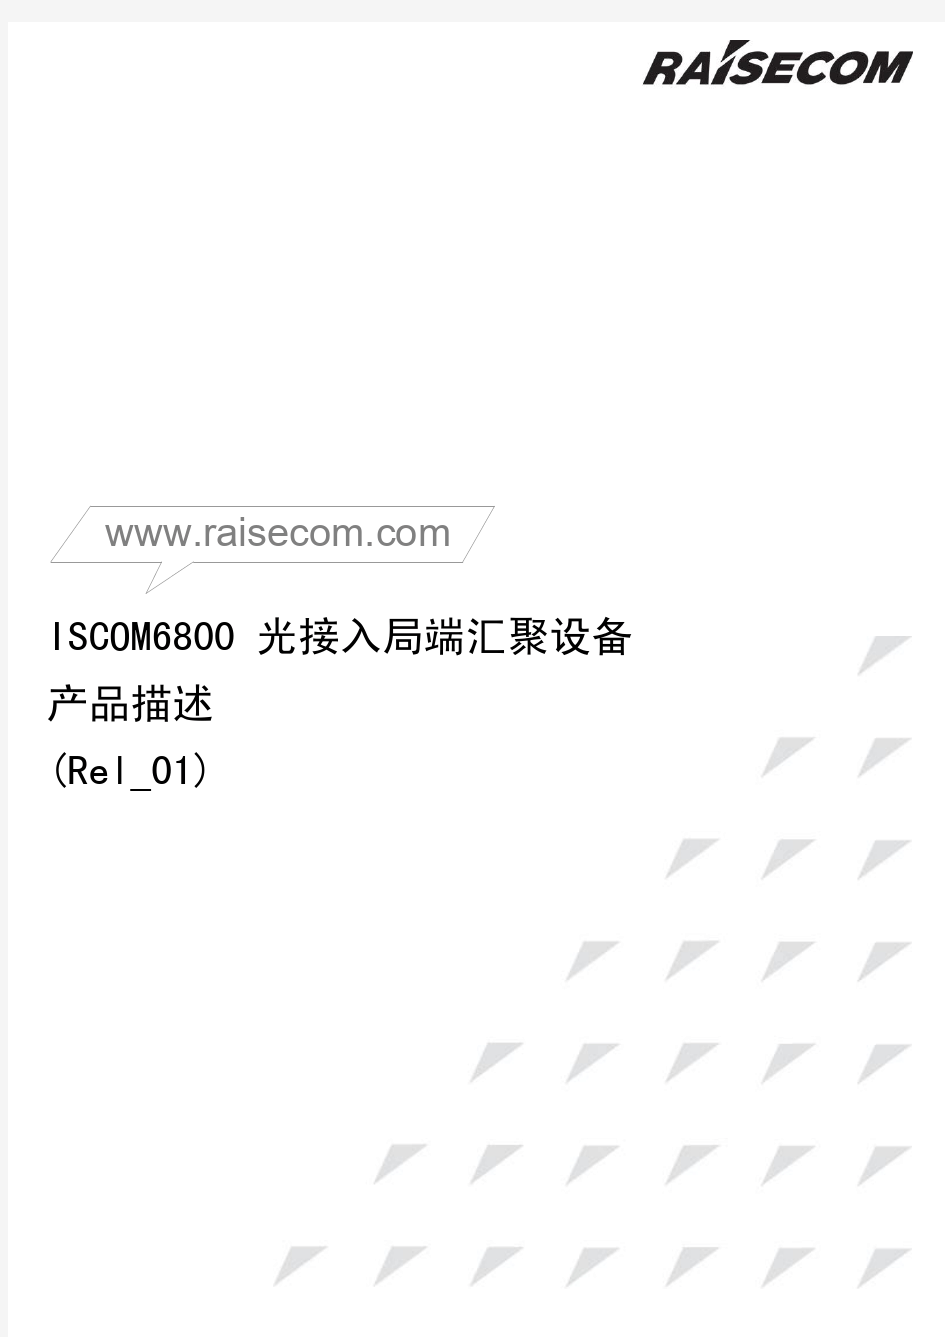 ISCOM6800(A) 光接入局端汇聚设备 产品描述(Rel_01)